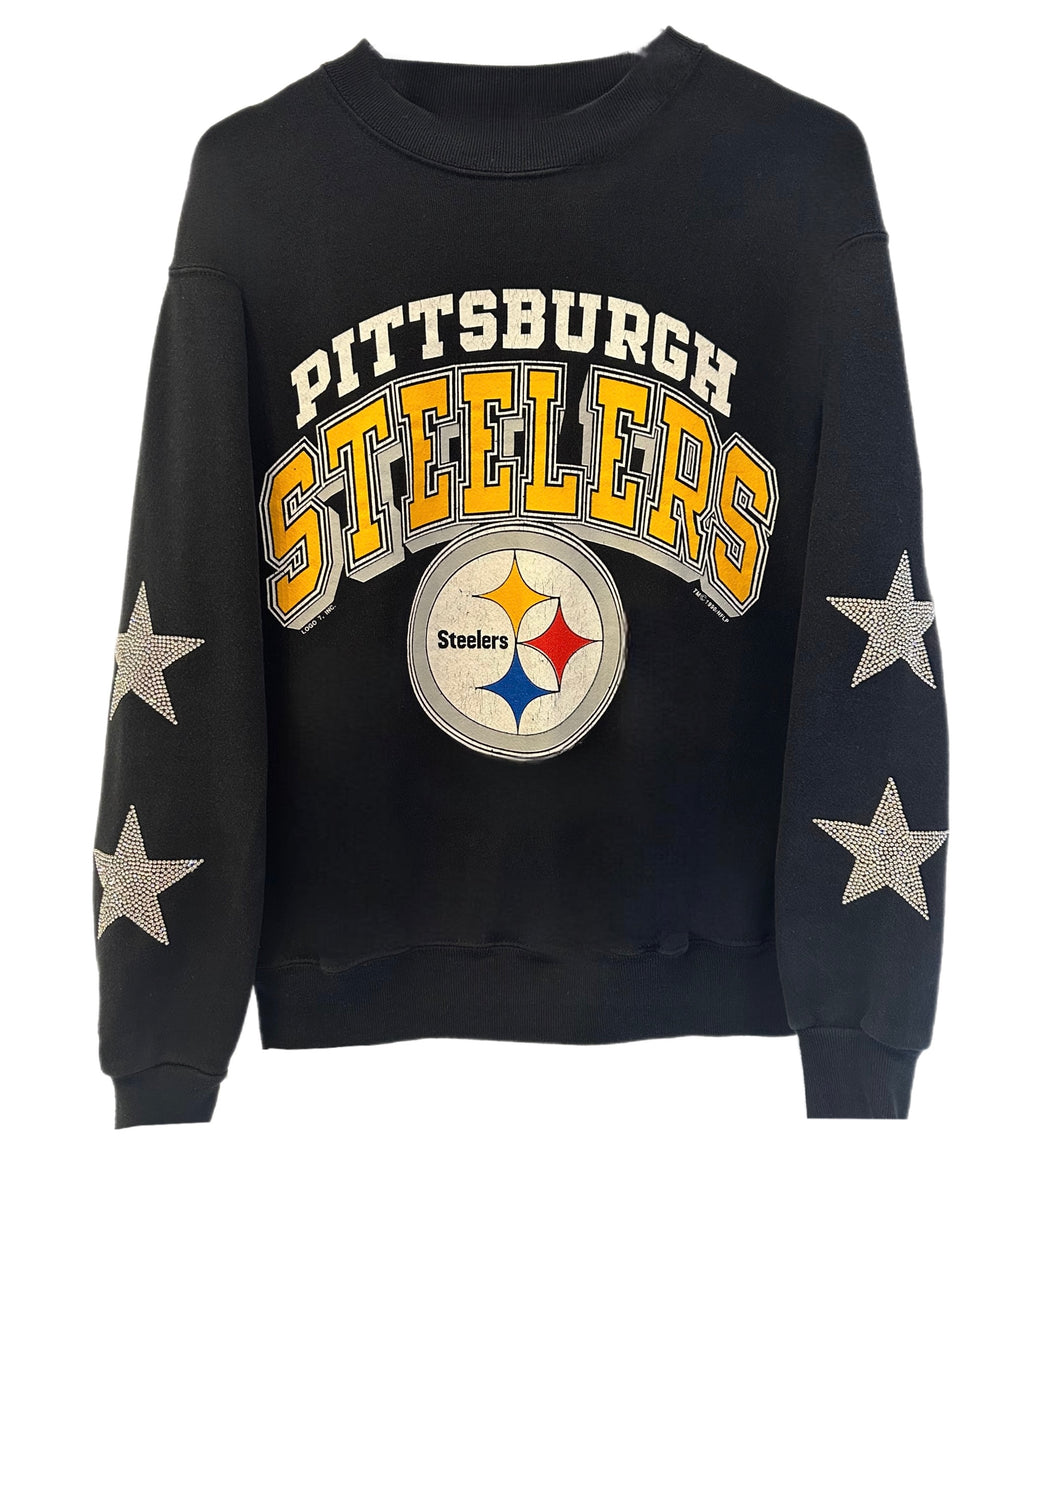 Pittsburgh Steelers, NFL One of a KIND Vintage Sweatshirt with Crystal Star Design